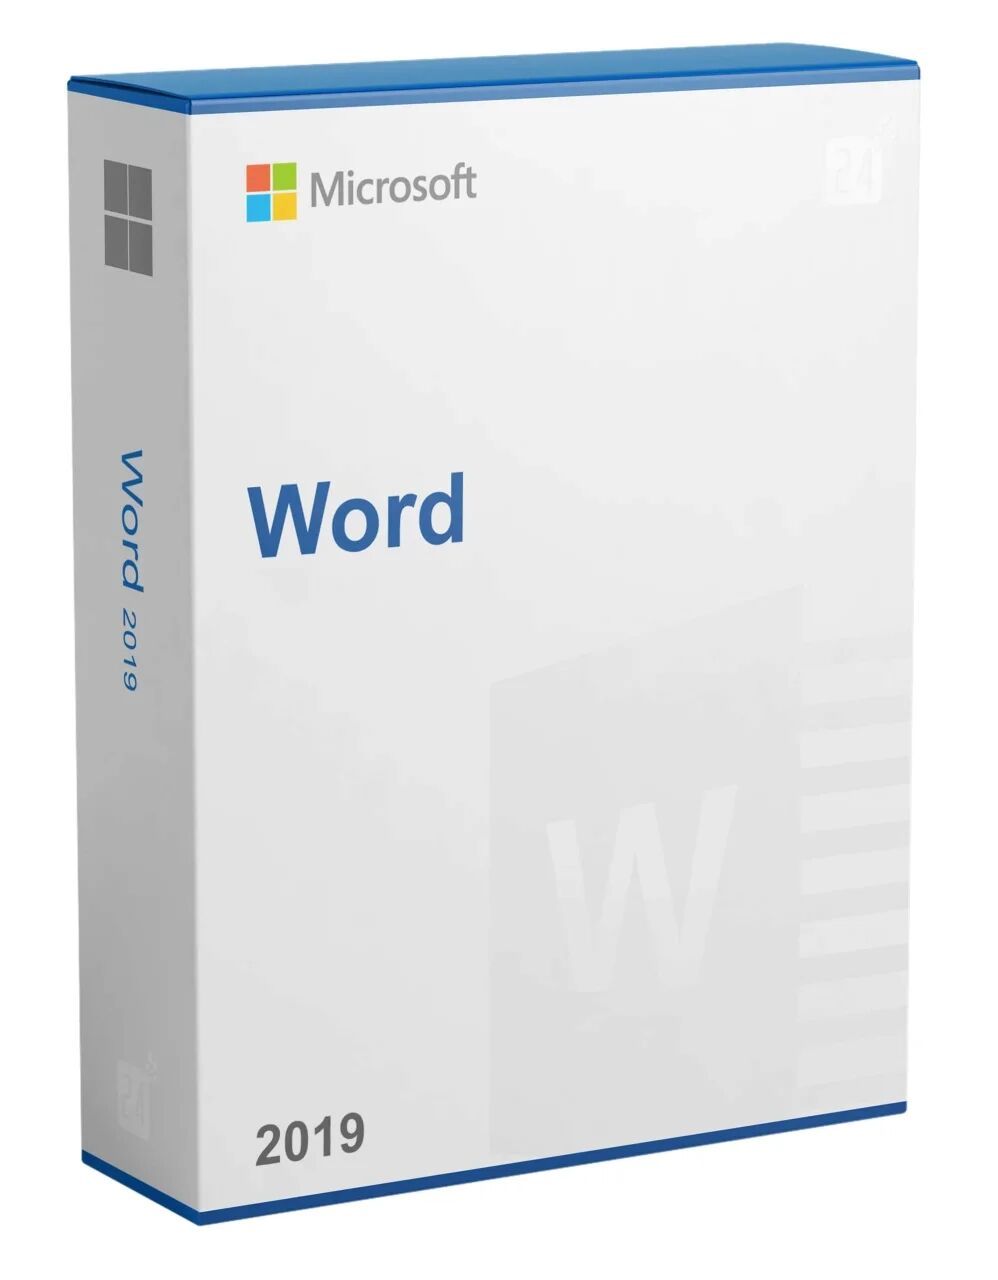 Microsoft Word 2019 Mac OS